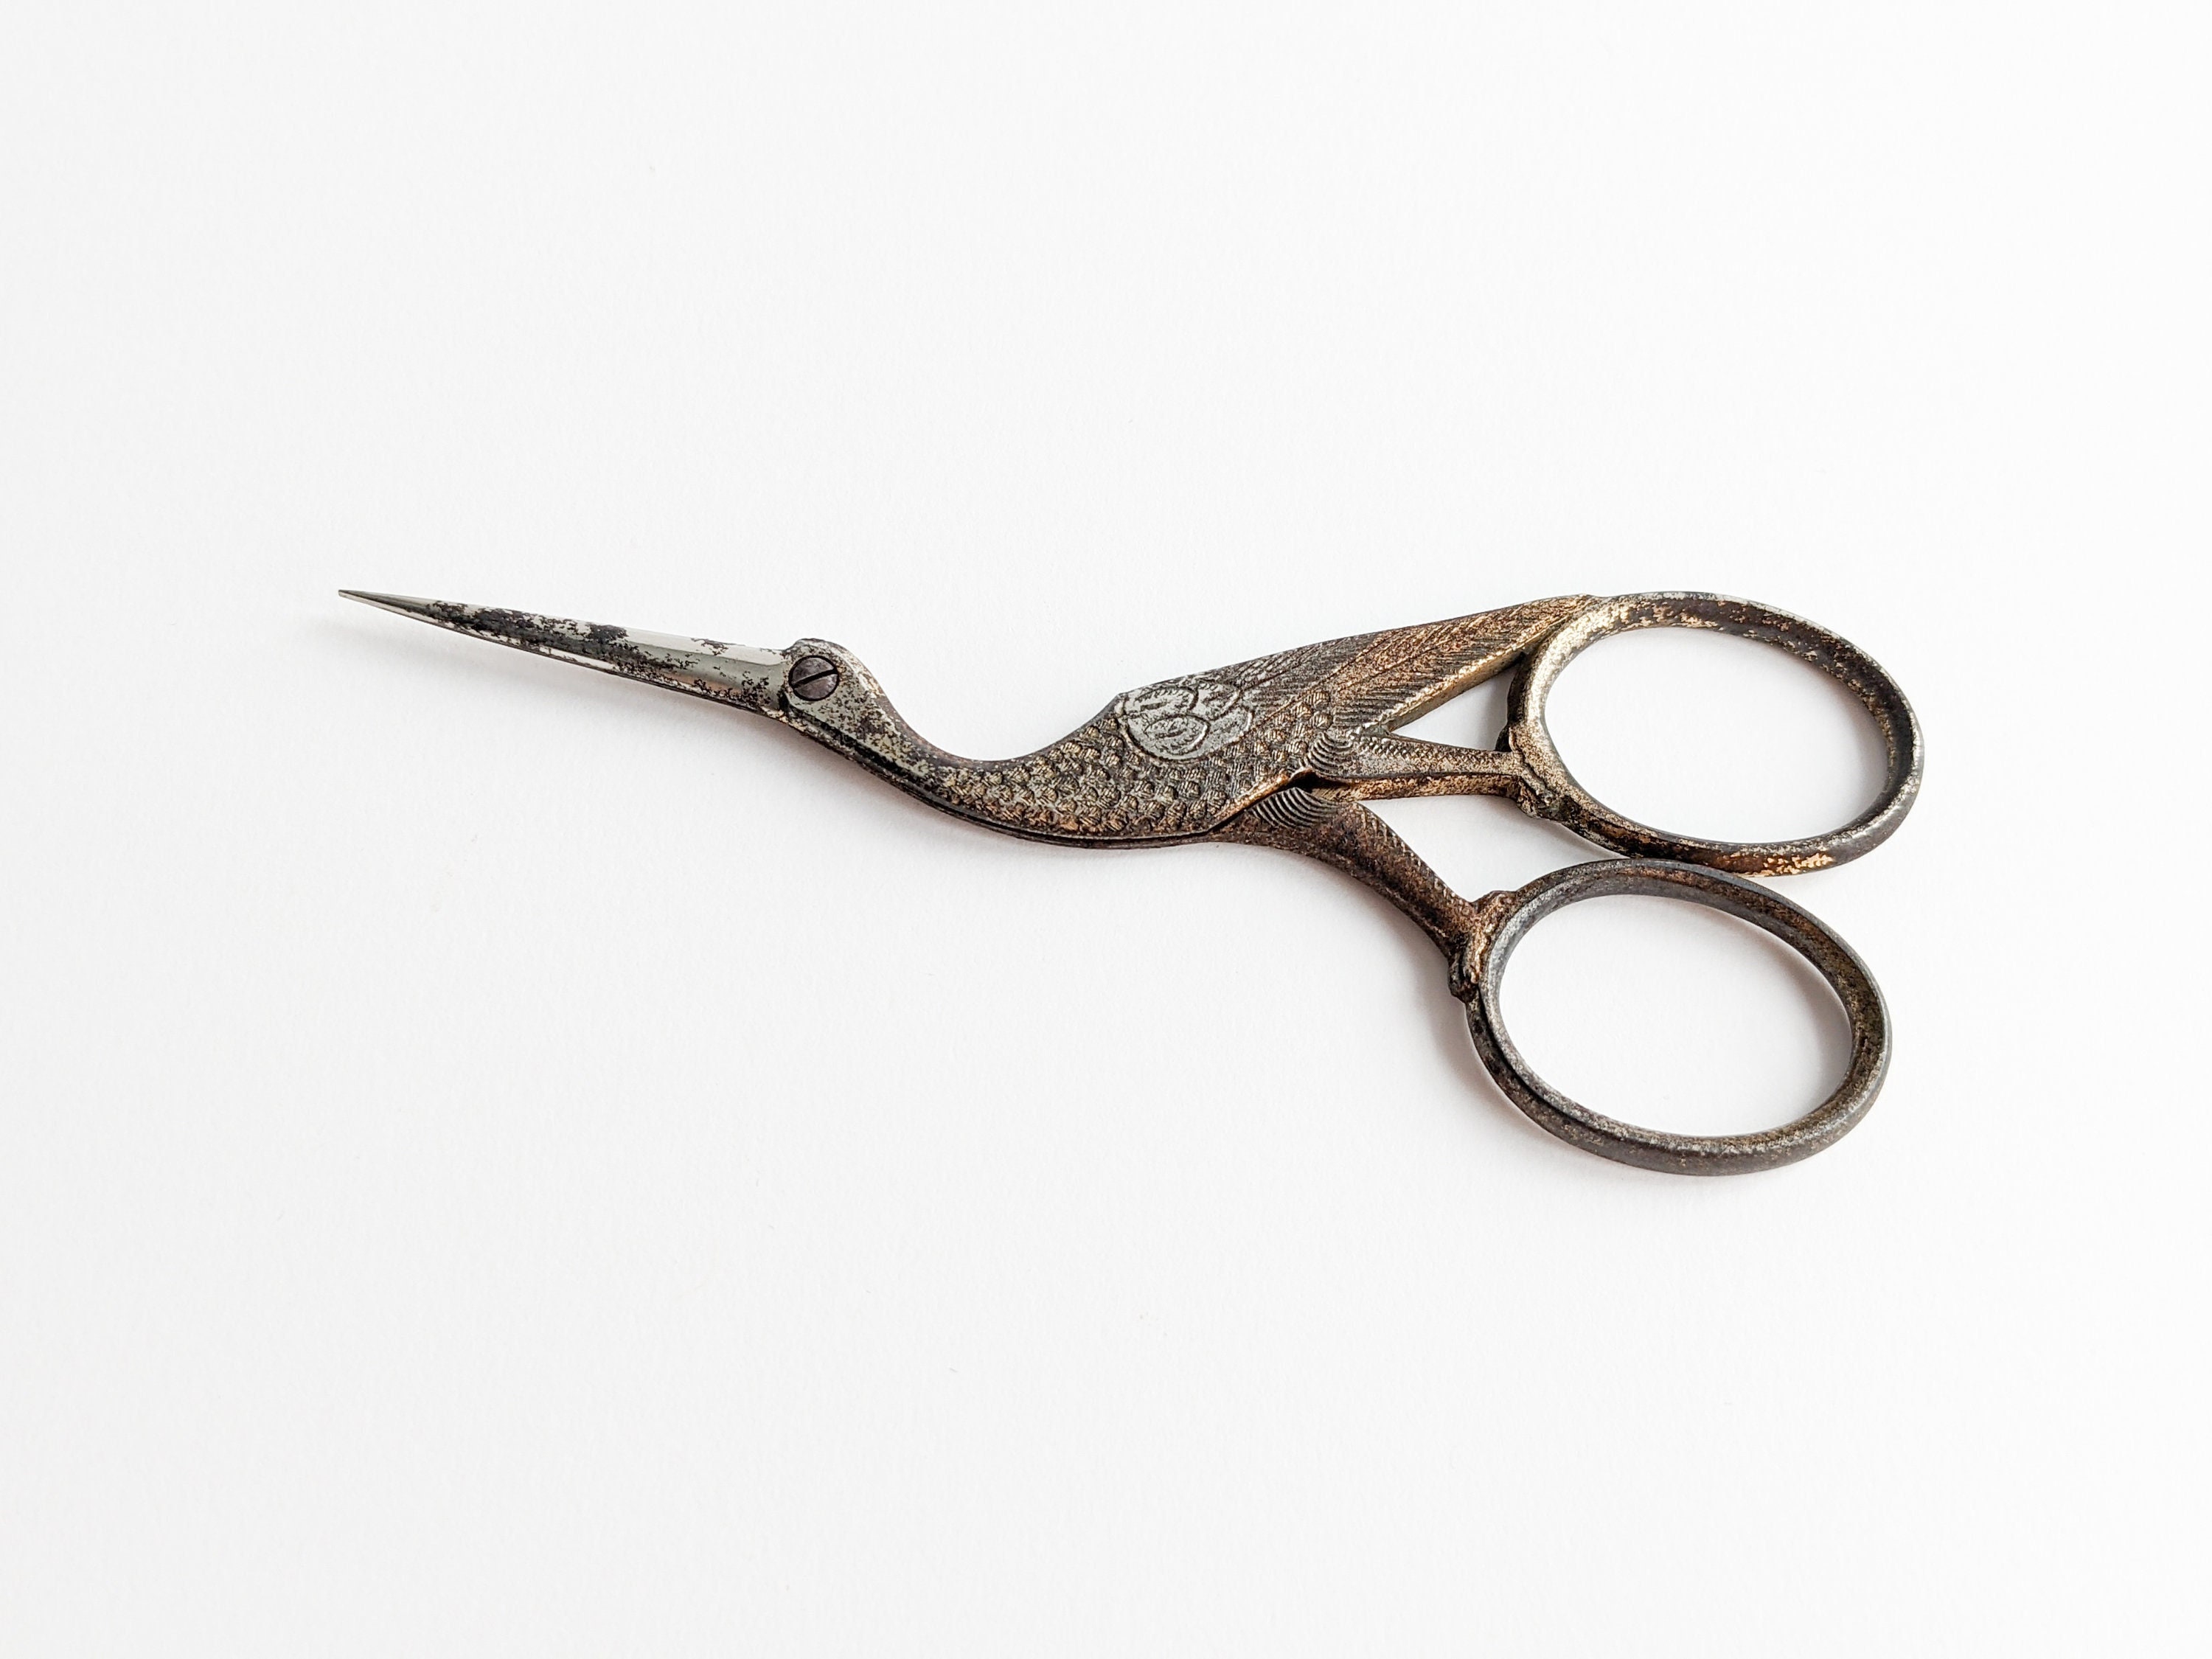 Antique Stork embroidery scissors